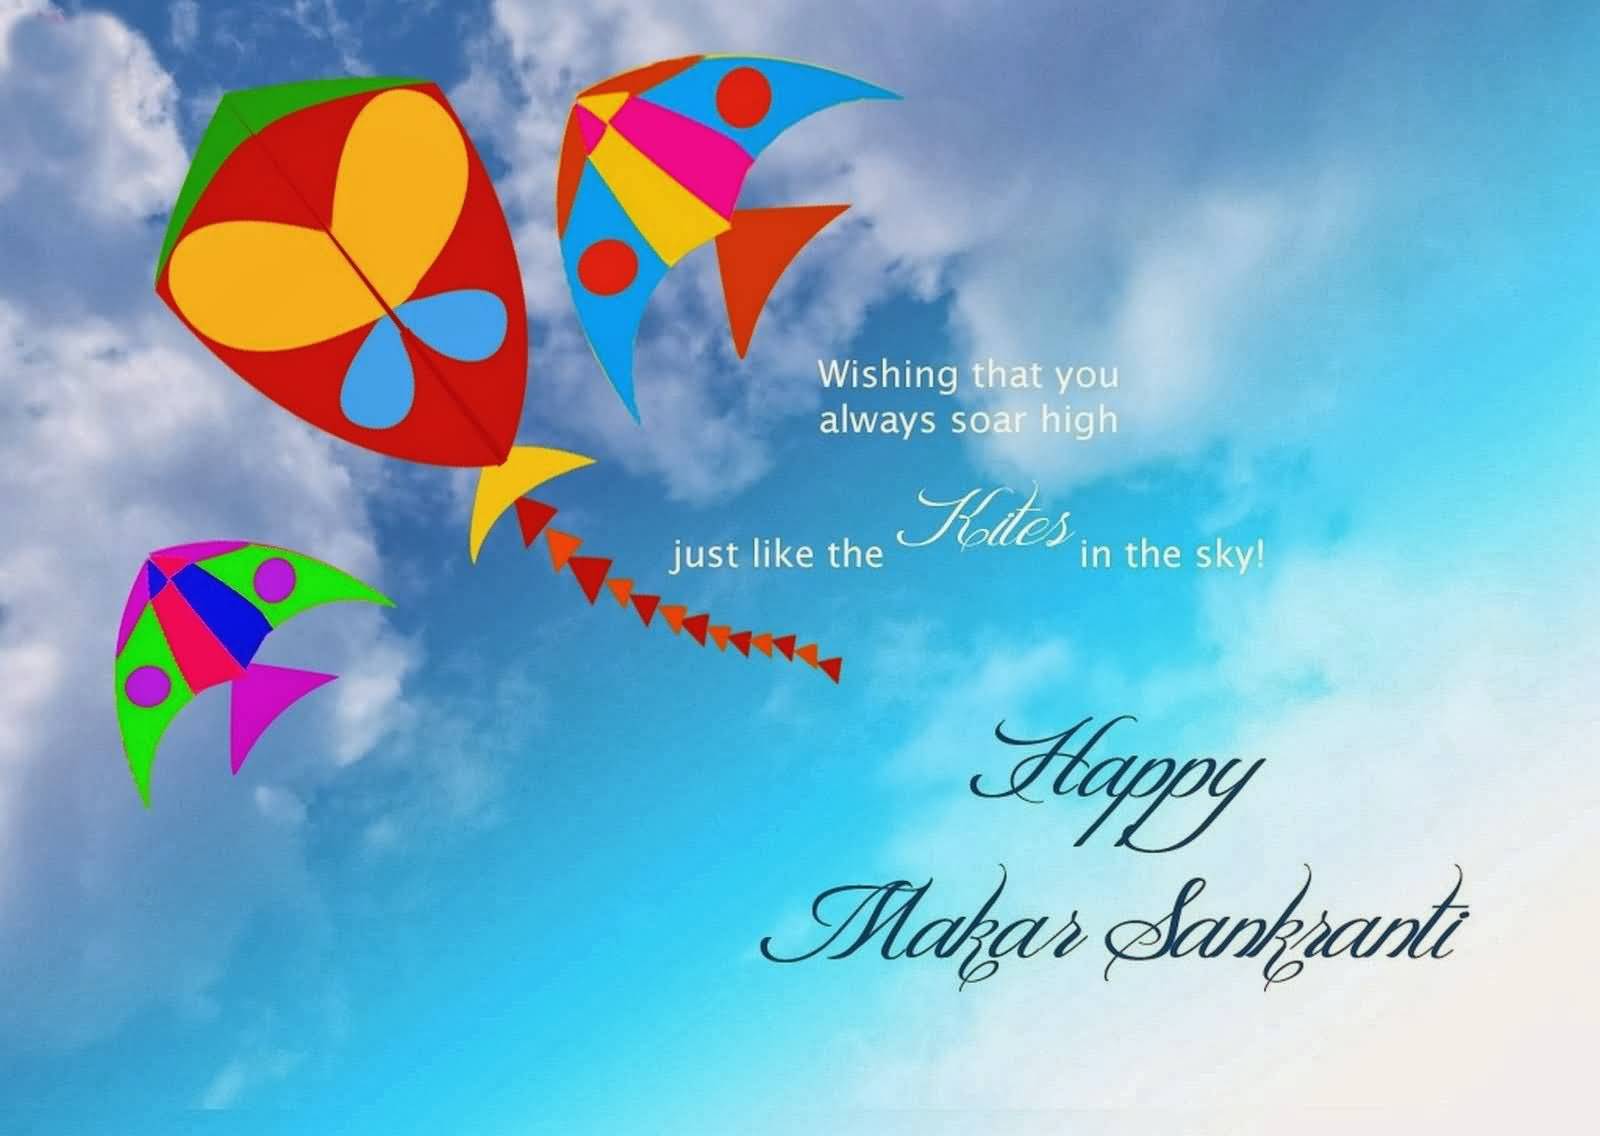 Wishing That You Always Soar High Just Like The Kites In The Sky Happy Makar Sankranti